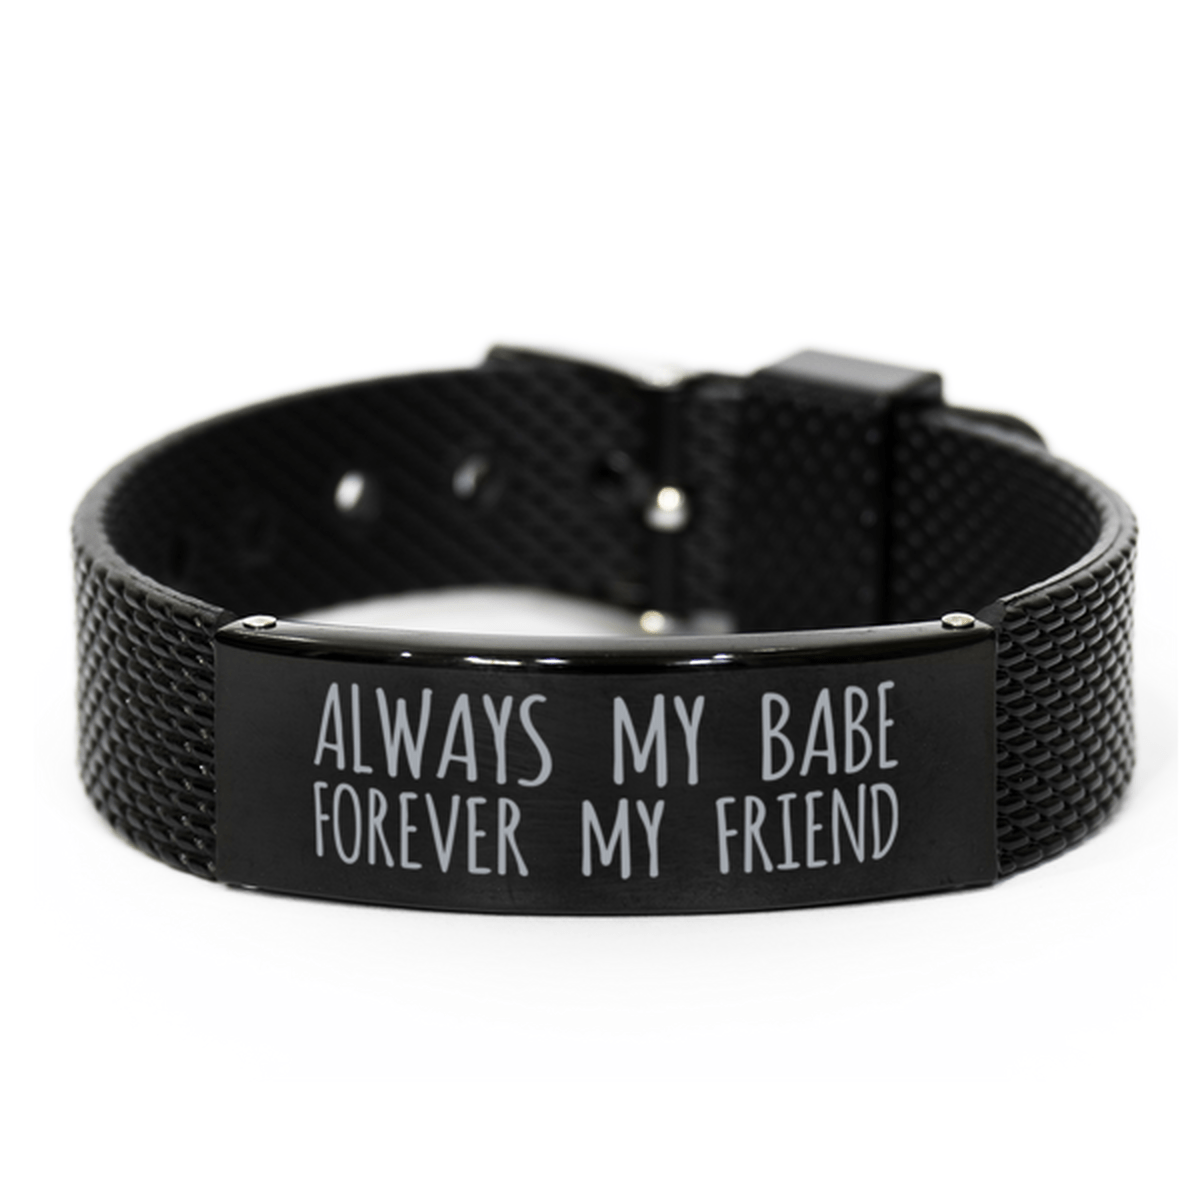 Inspirational Babe Black Shark Mesh Bracelet, Always My Babe Forever My Friend, Best Birthday Gifts for Family Friends